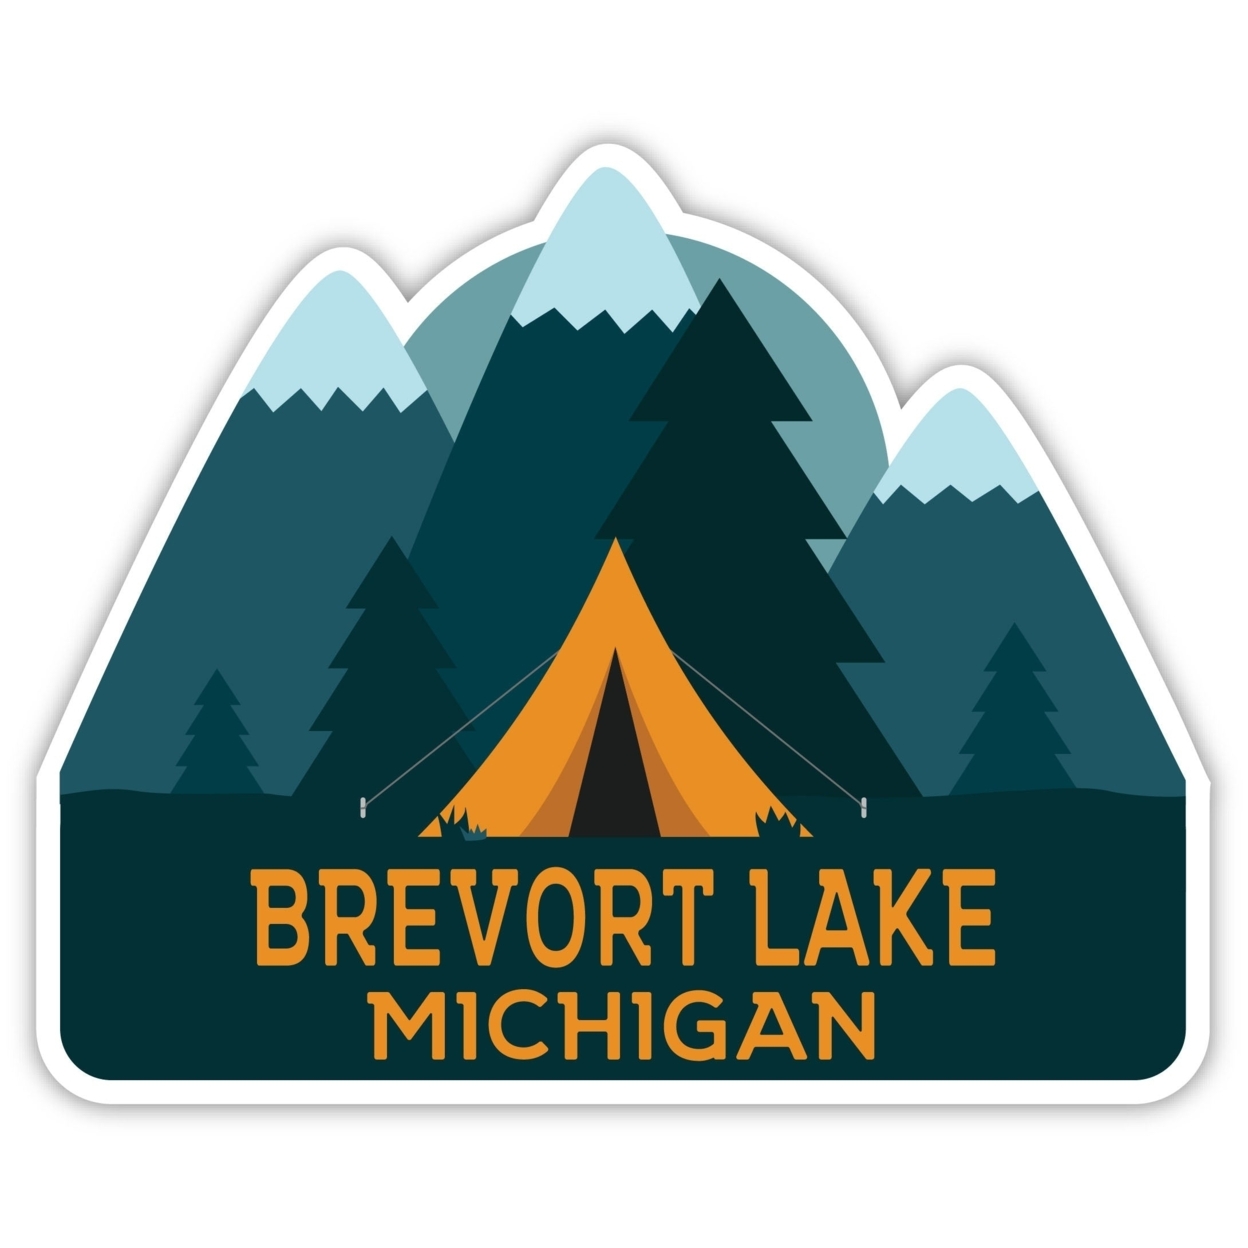 Brevort Lake Michigan Souvenir Decorative Stickers (Choose Theme And Size) - Single Unit, 8-Inch, Tent